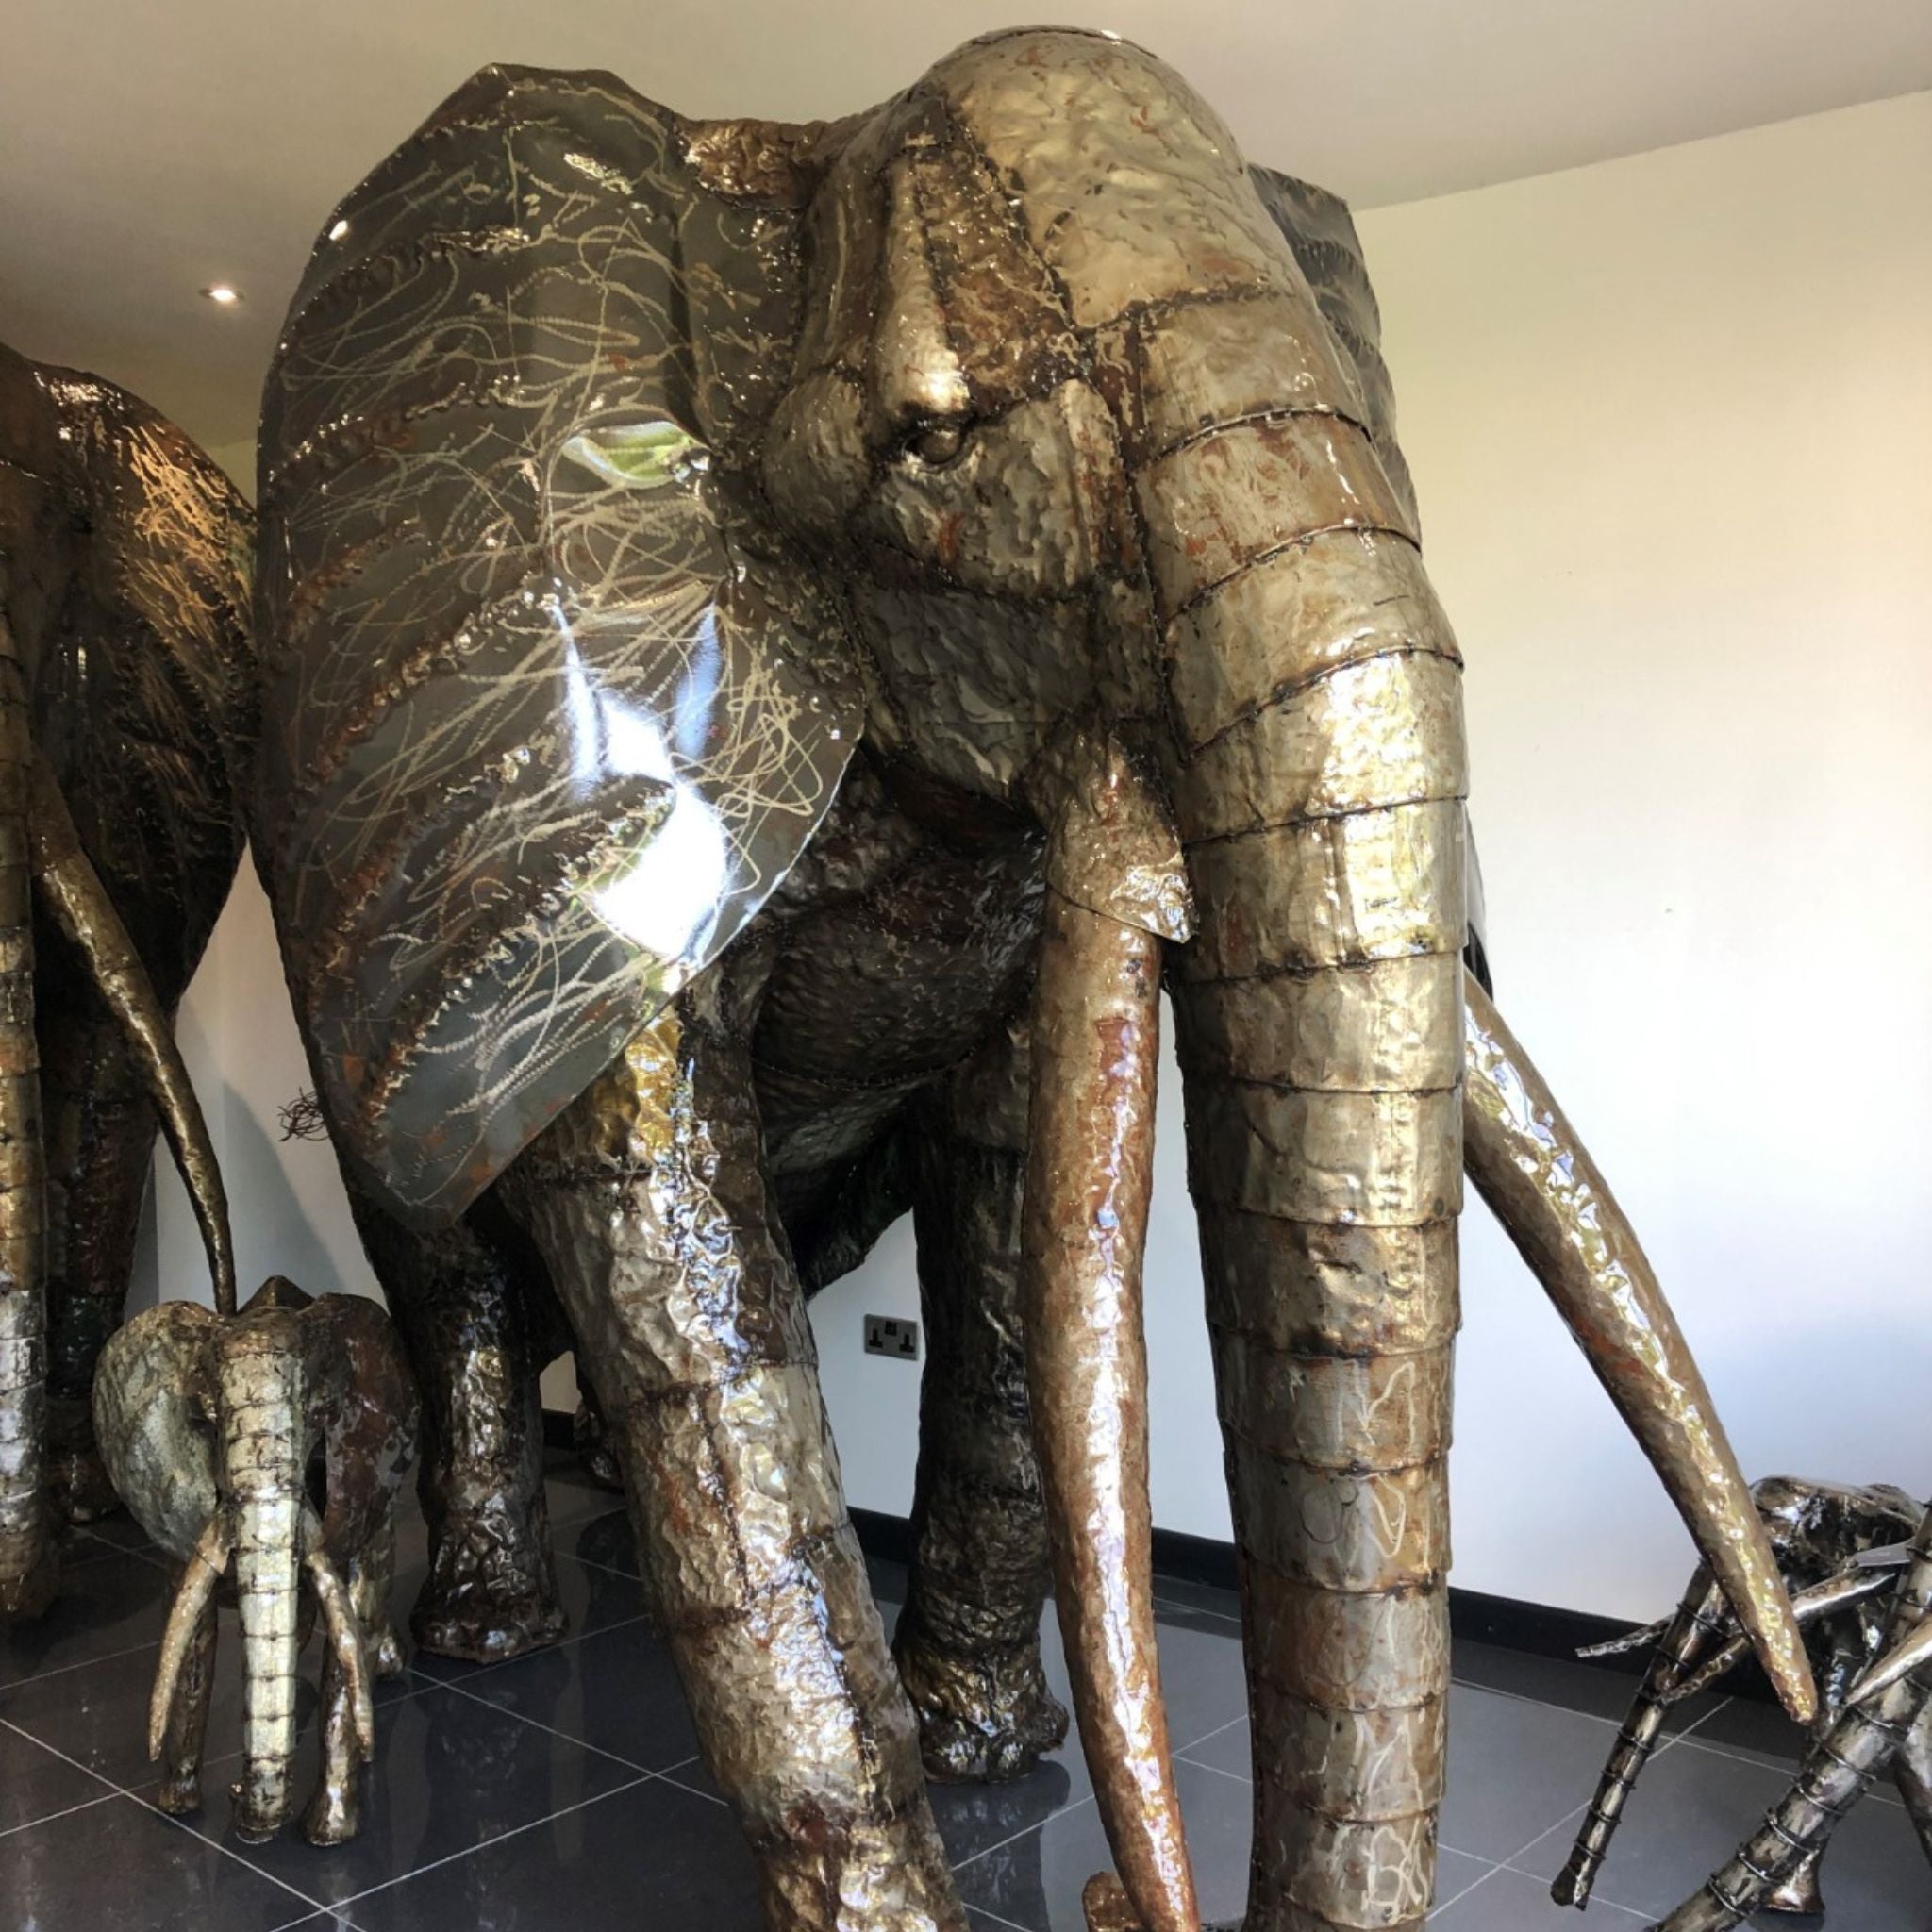 Natural Elephant - Pangea Sculptures